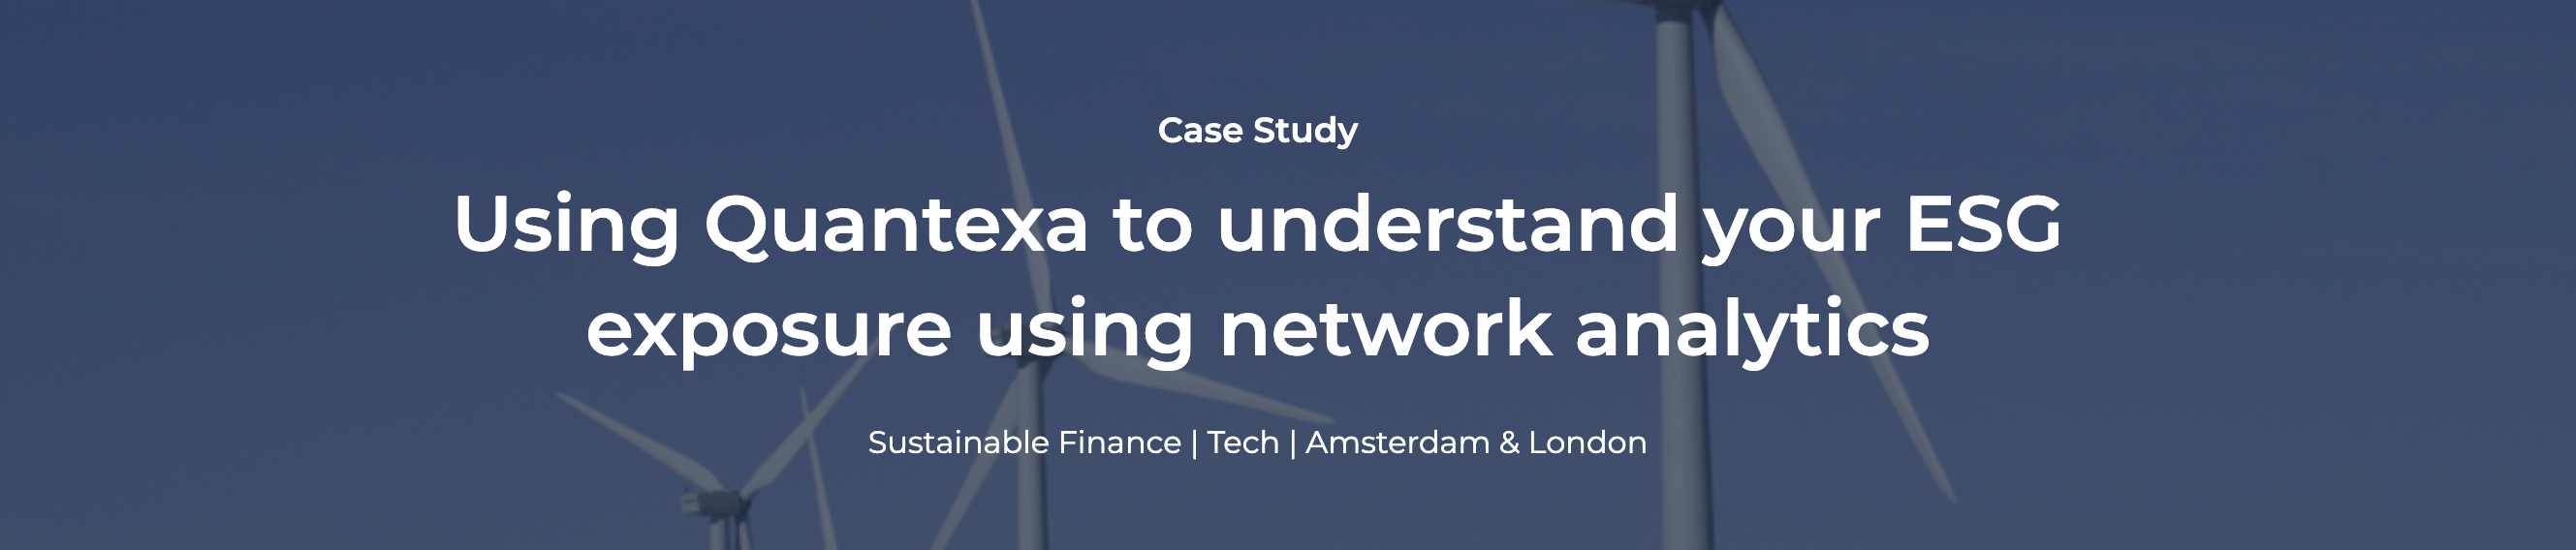 Case Study: Using Quantexa to understand your ESG exposure using network analytics